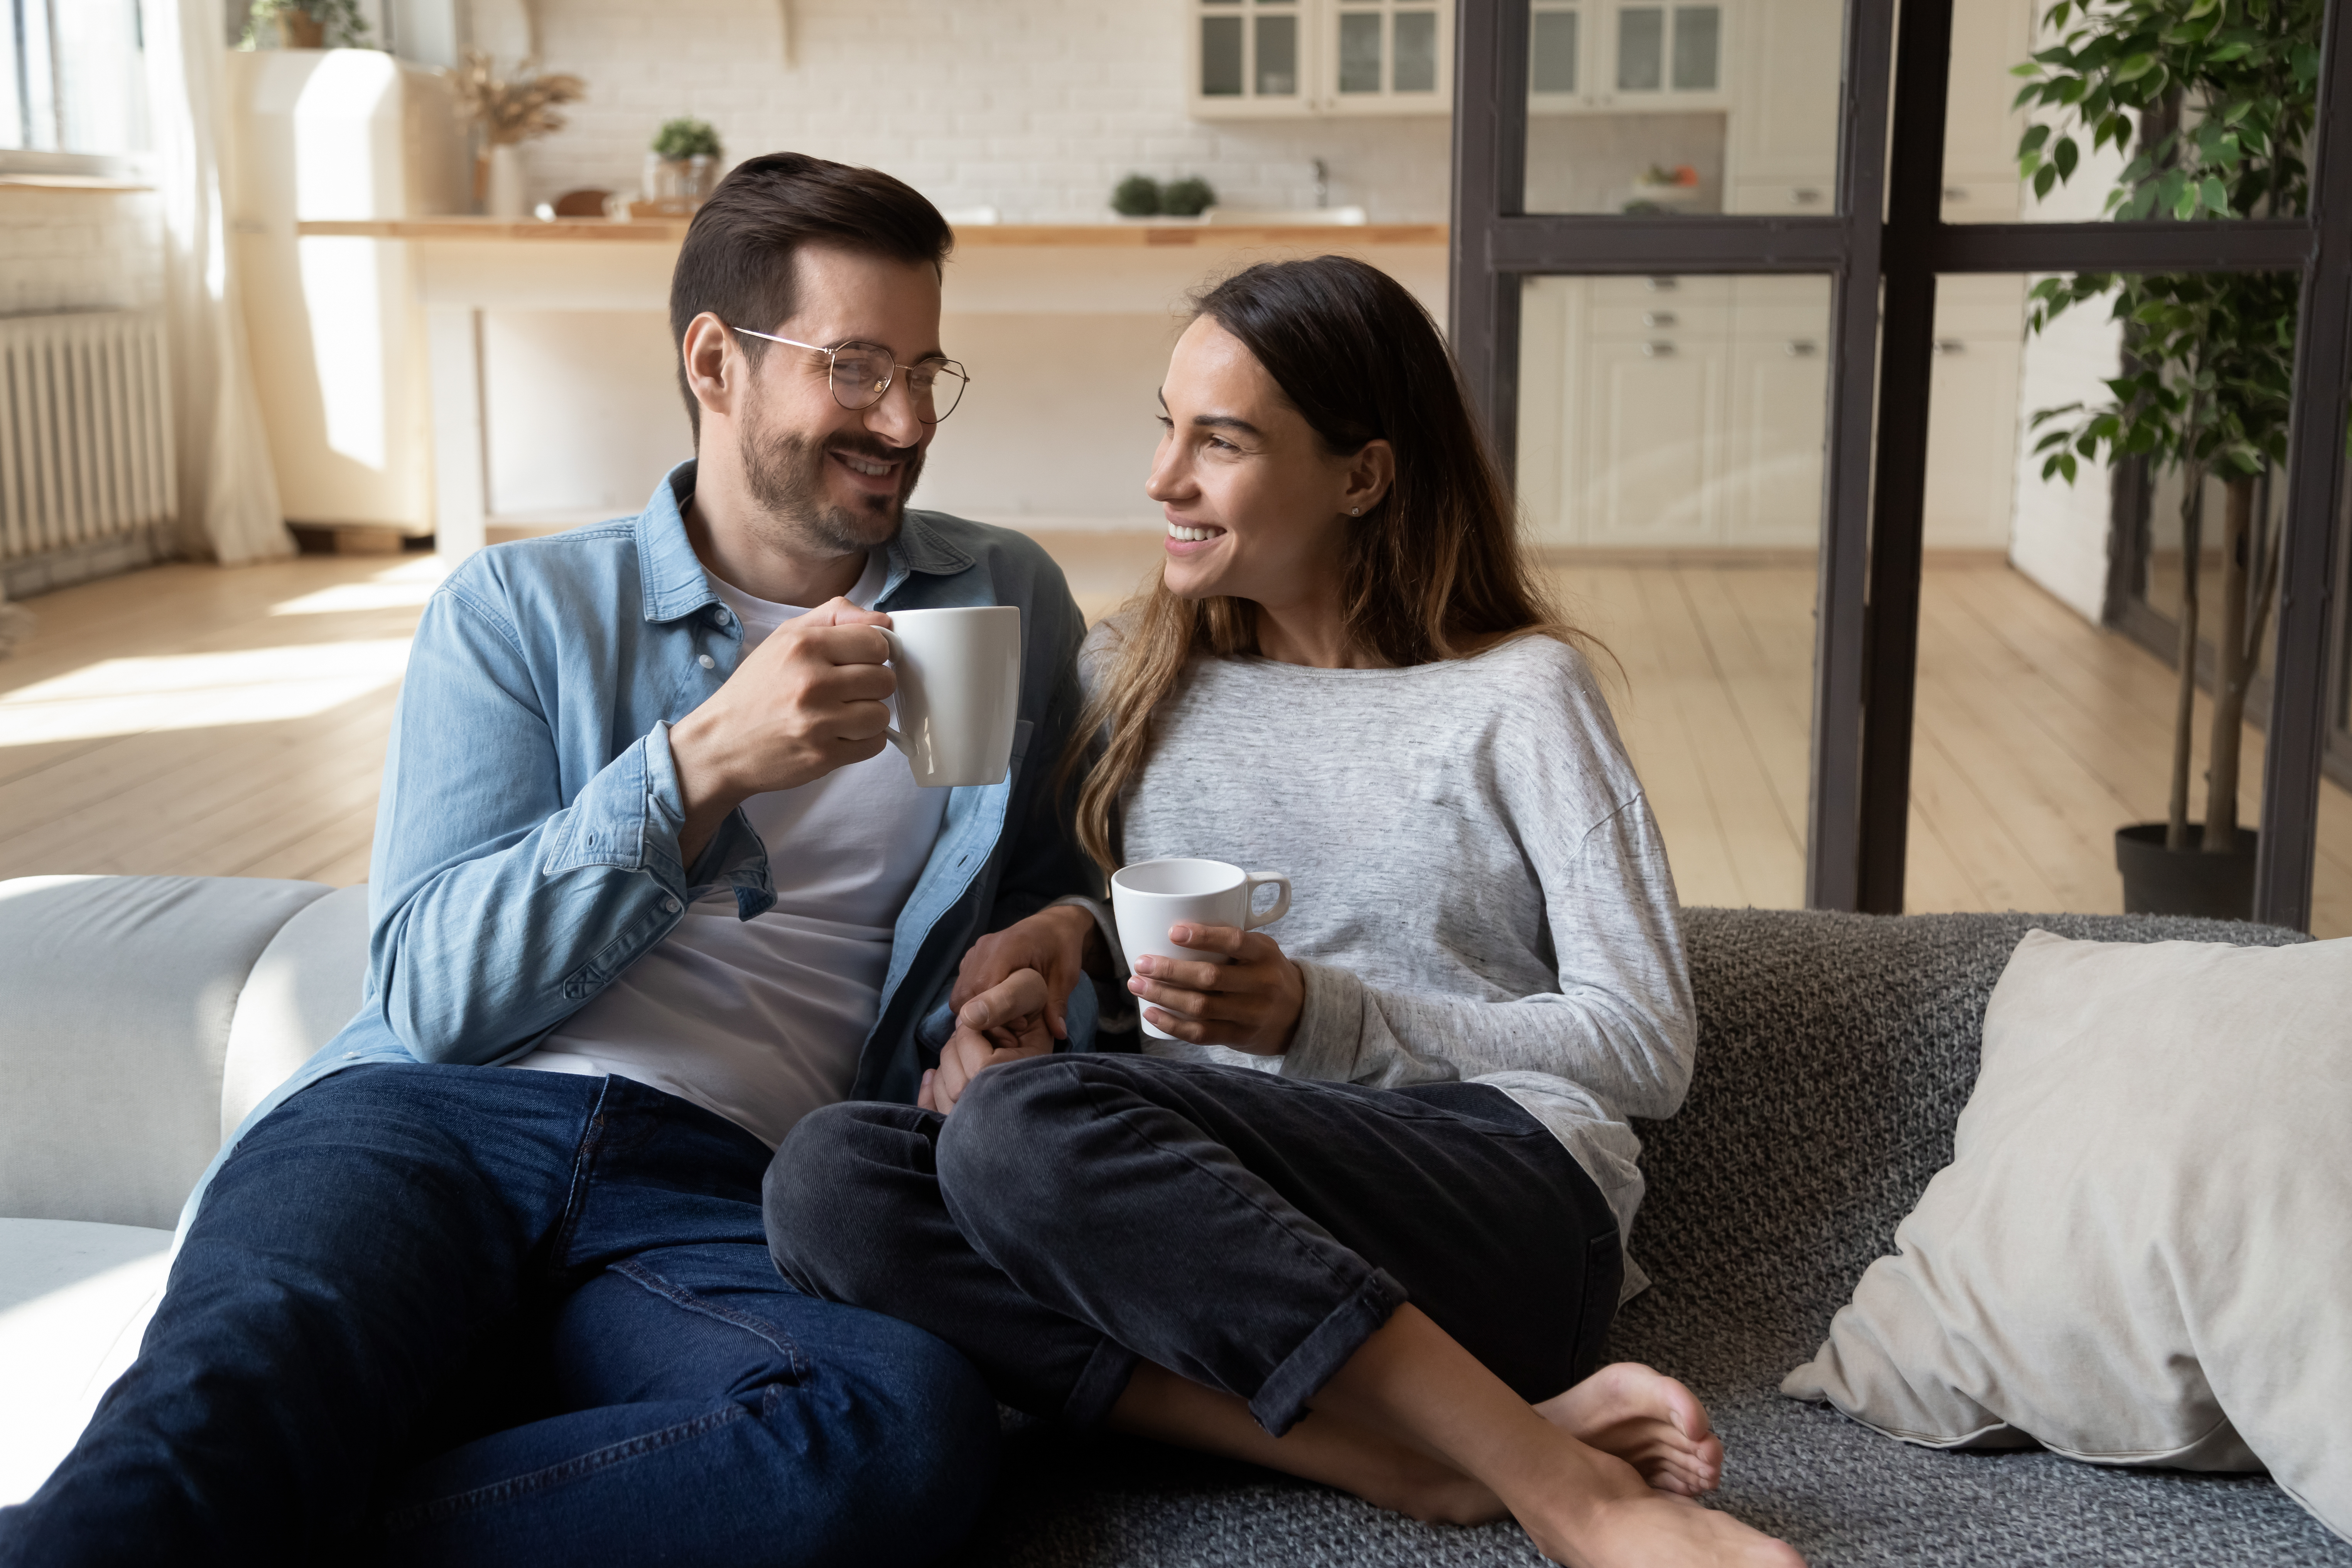 A couple enjoying tea at home | Source: Shutterstock